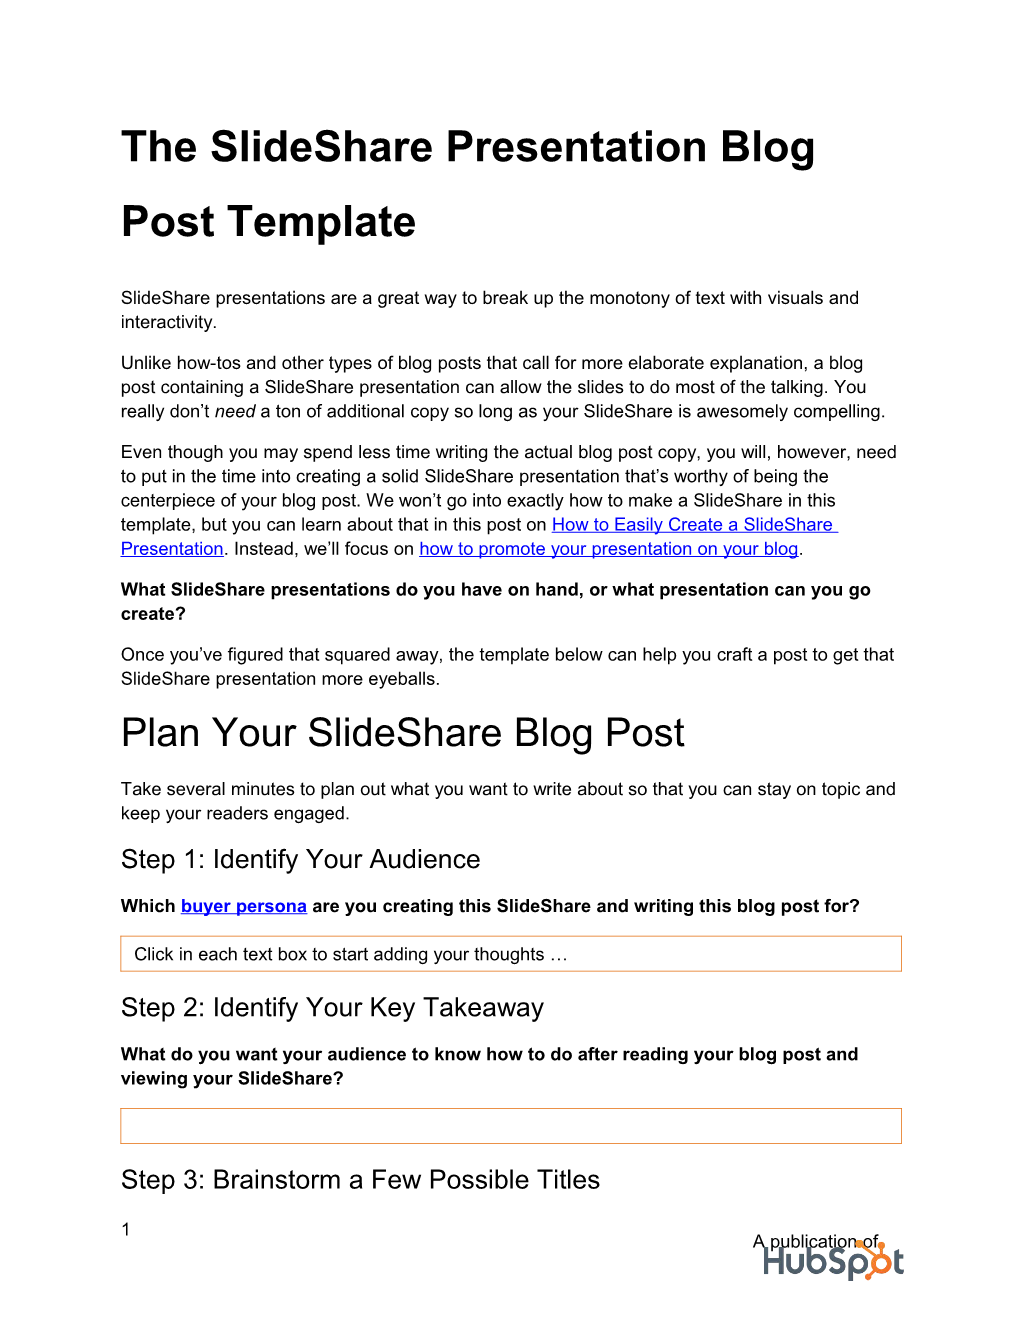 The Slideshare Presentation Blog Post Template